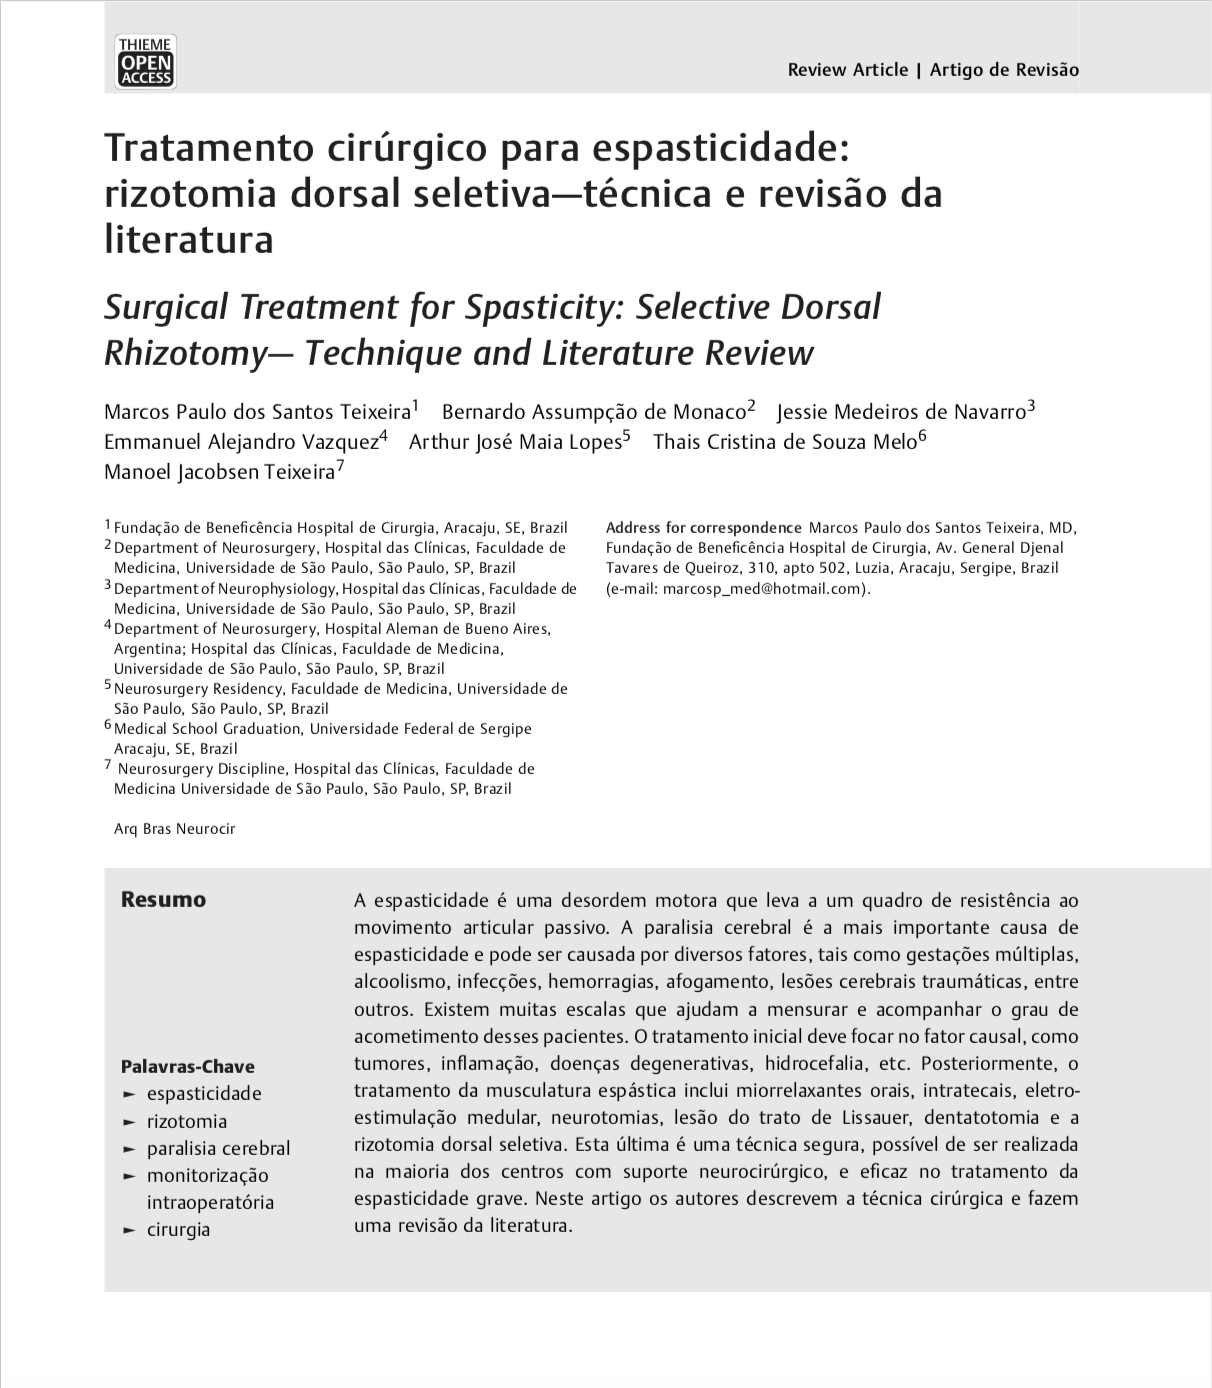 rizotomia dorsal seletiva; revisão técnica cirúrgica de RDS; Selective Dorsal Rhizotomy